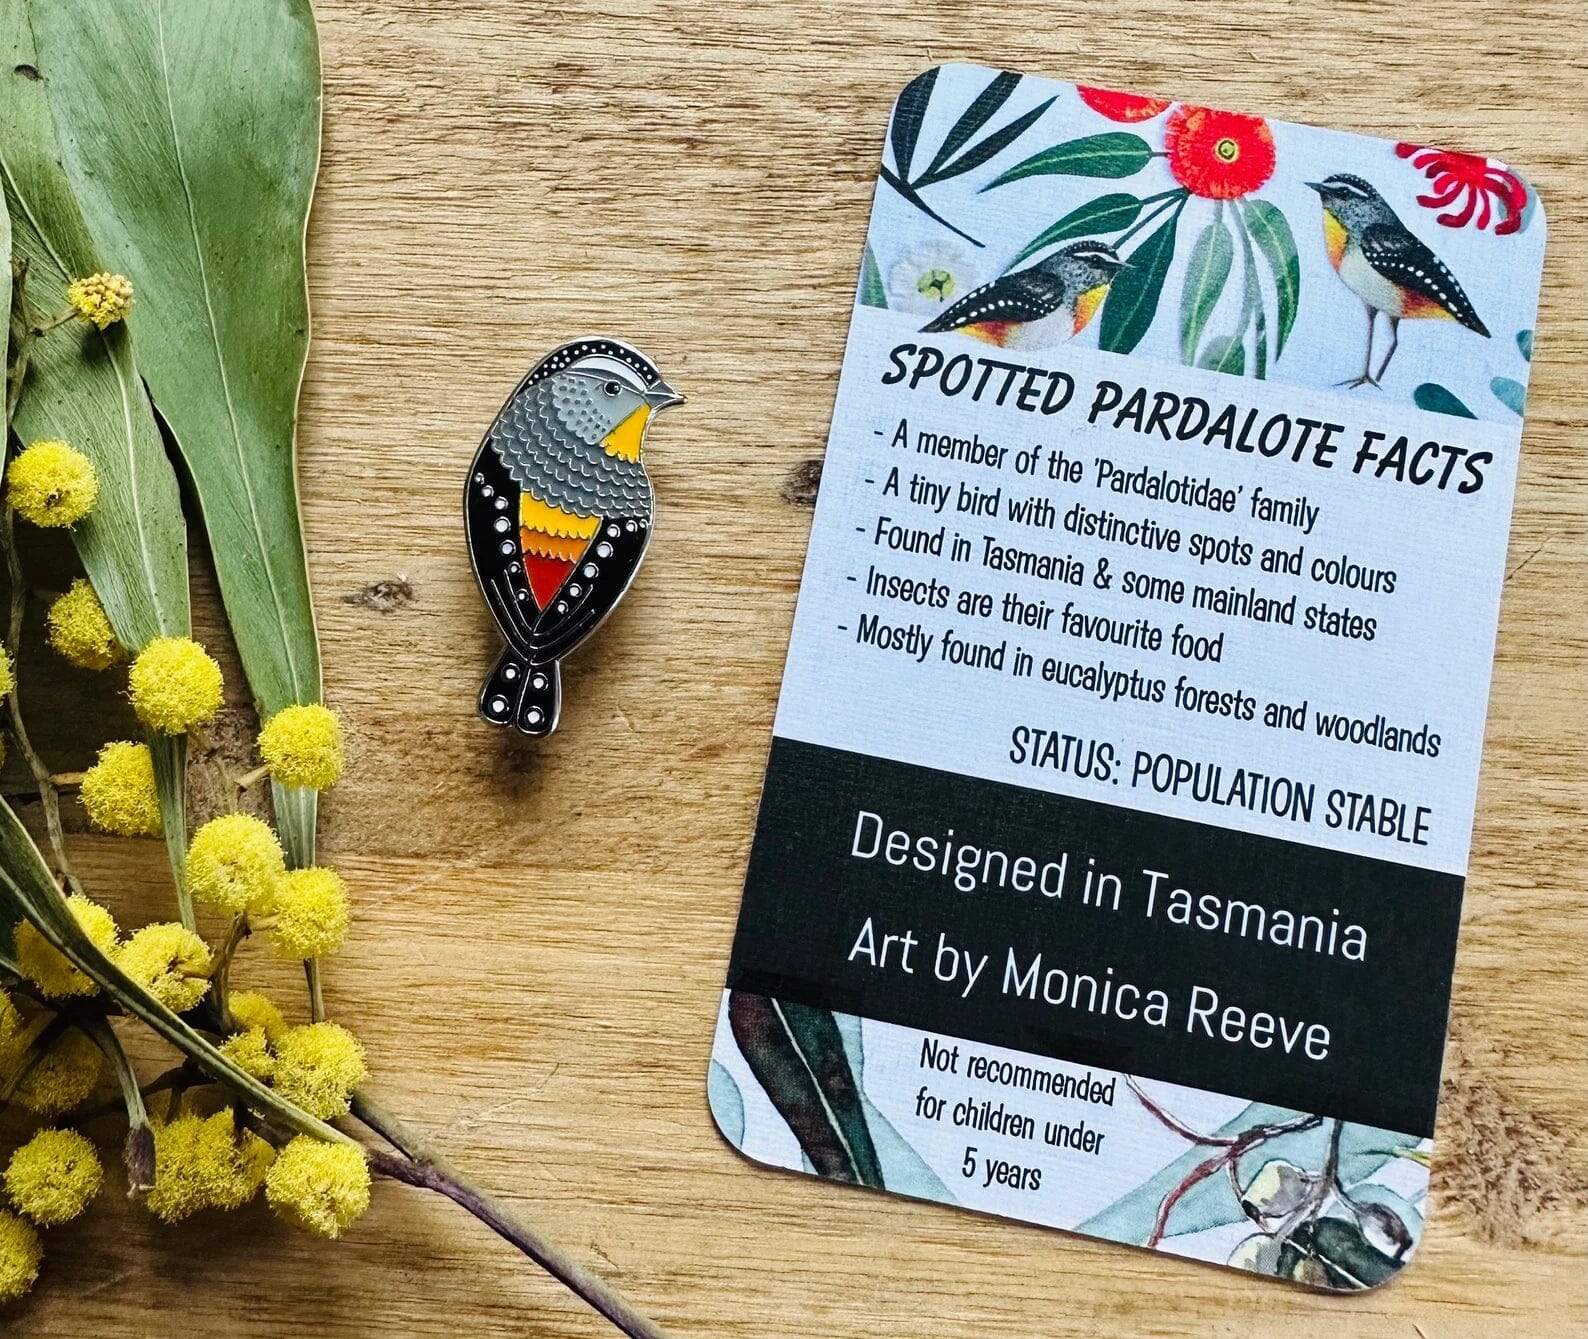 Tasmanian Enamel Pins by Pigment brooch Pigment 